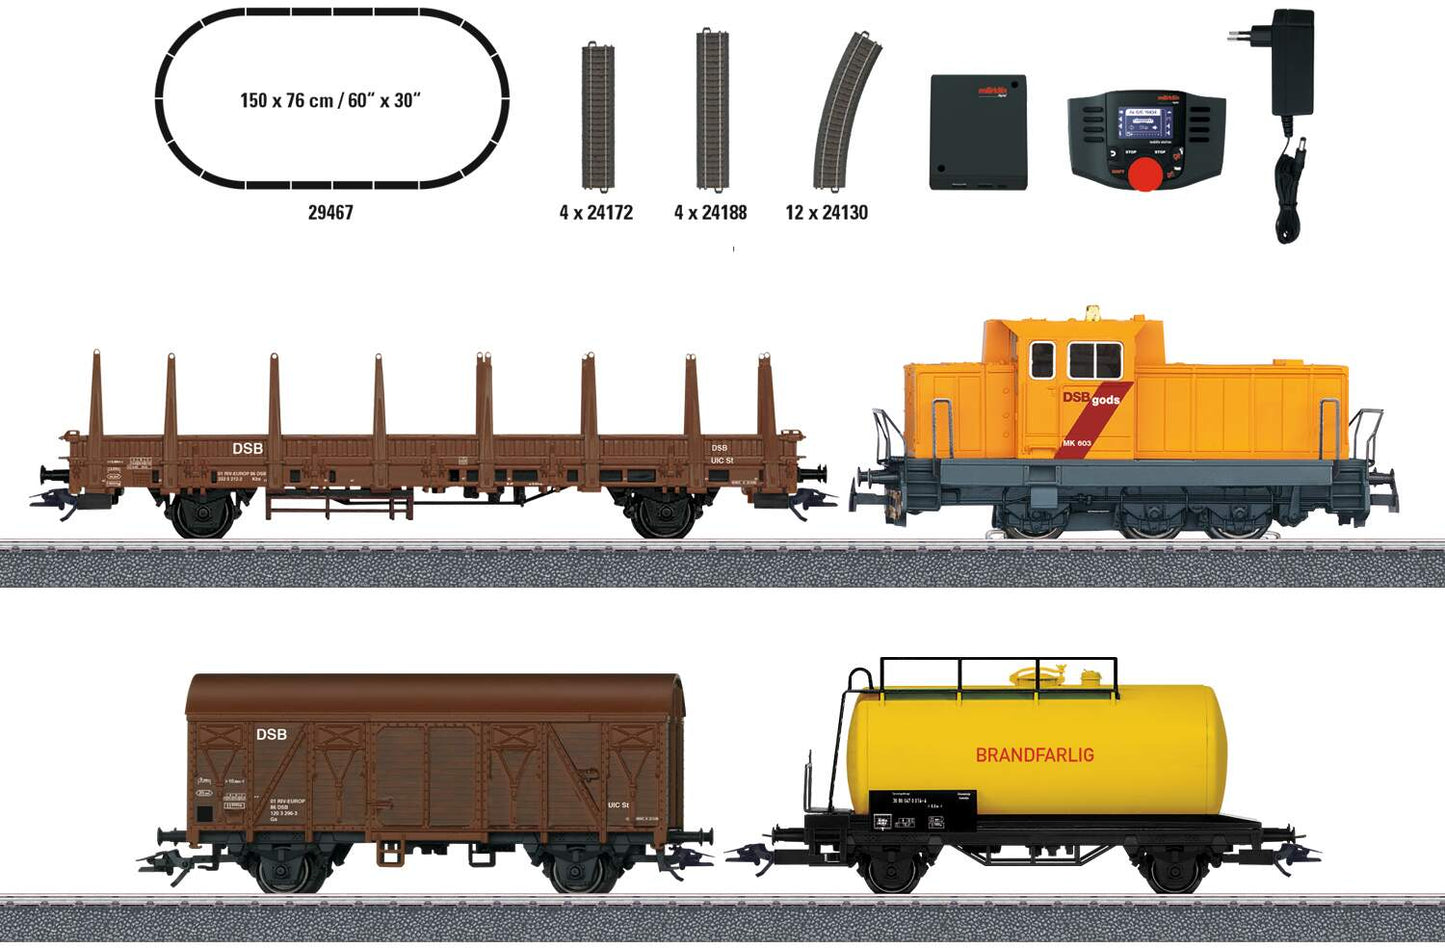 Marklin HO 29467 Danish Freight Train Starter Set - 3-Rail - Digital -- DSB Class MK Diesel, 3 Cars, C-Track Oval, Mobile Station